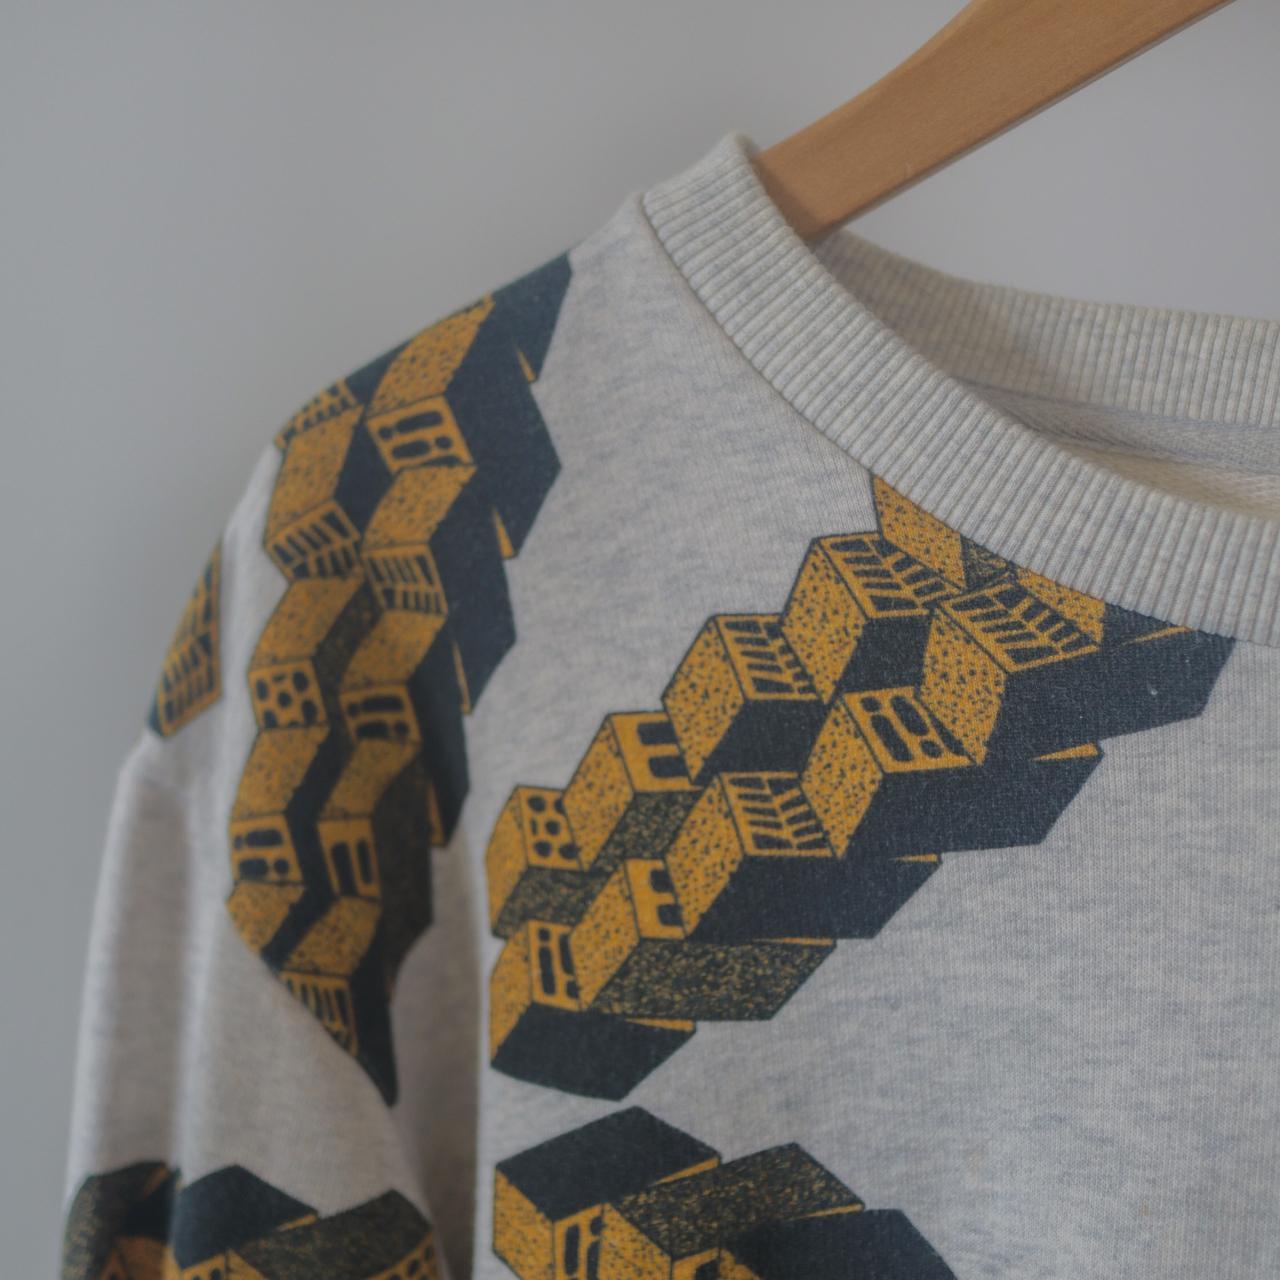 Product Image 2 - Henrik Vibskov printed Sweater. The